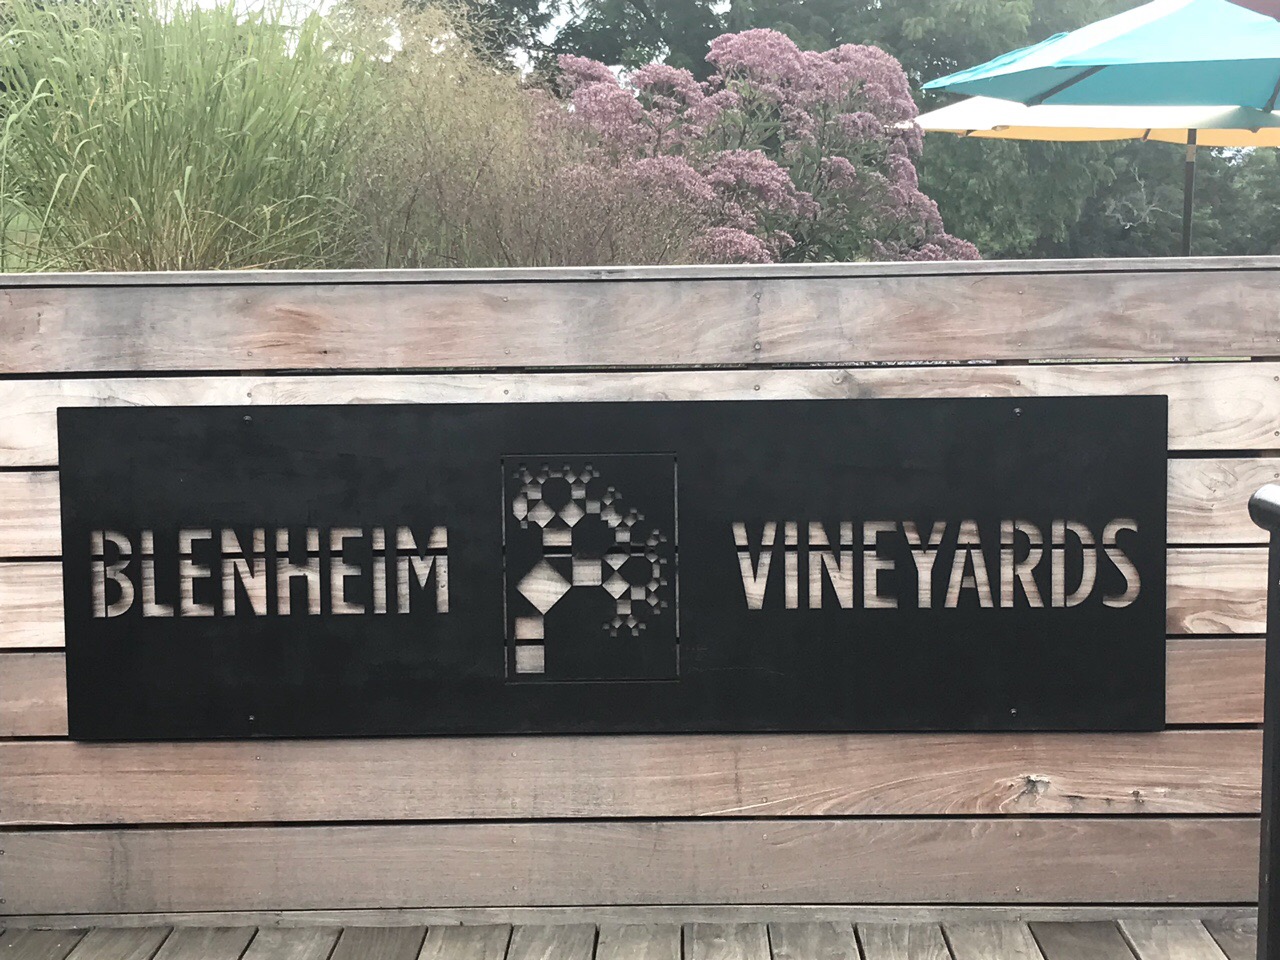 Summer 2018 Visit to Blenheim Vineyards